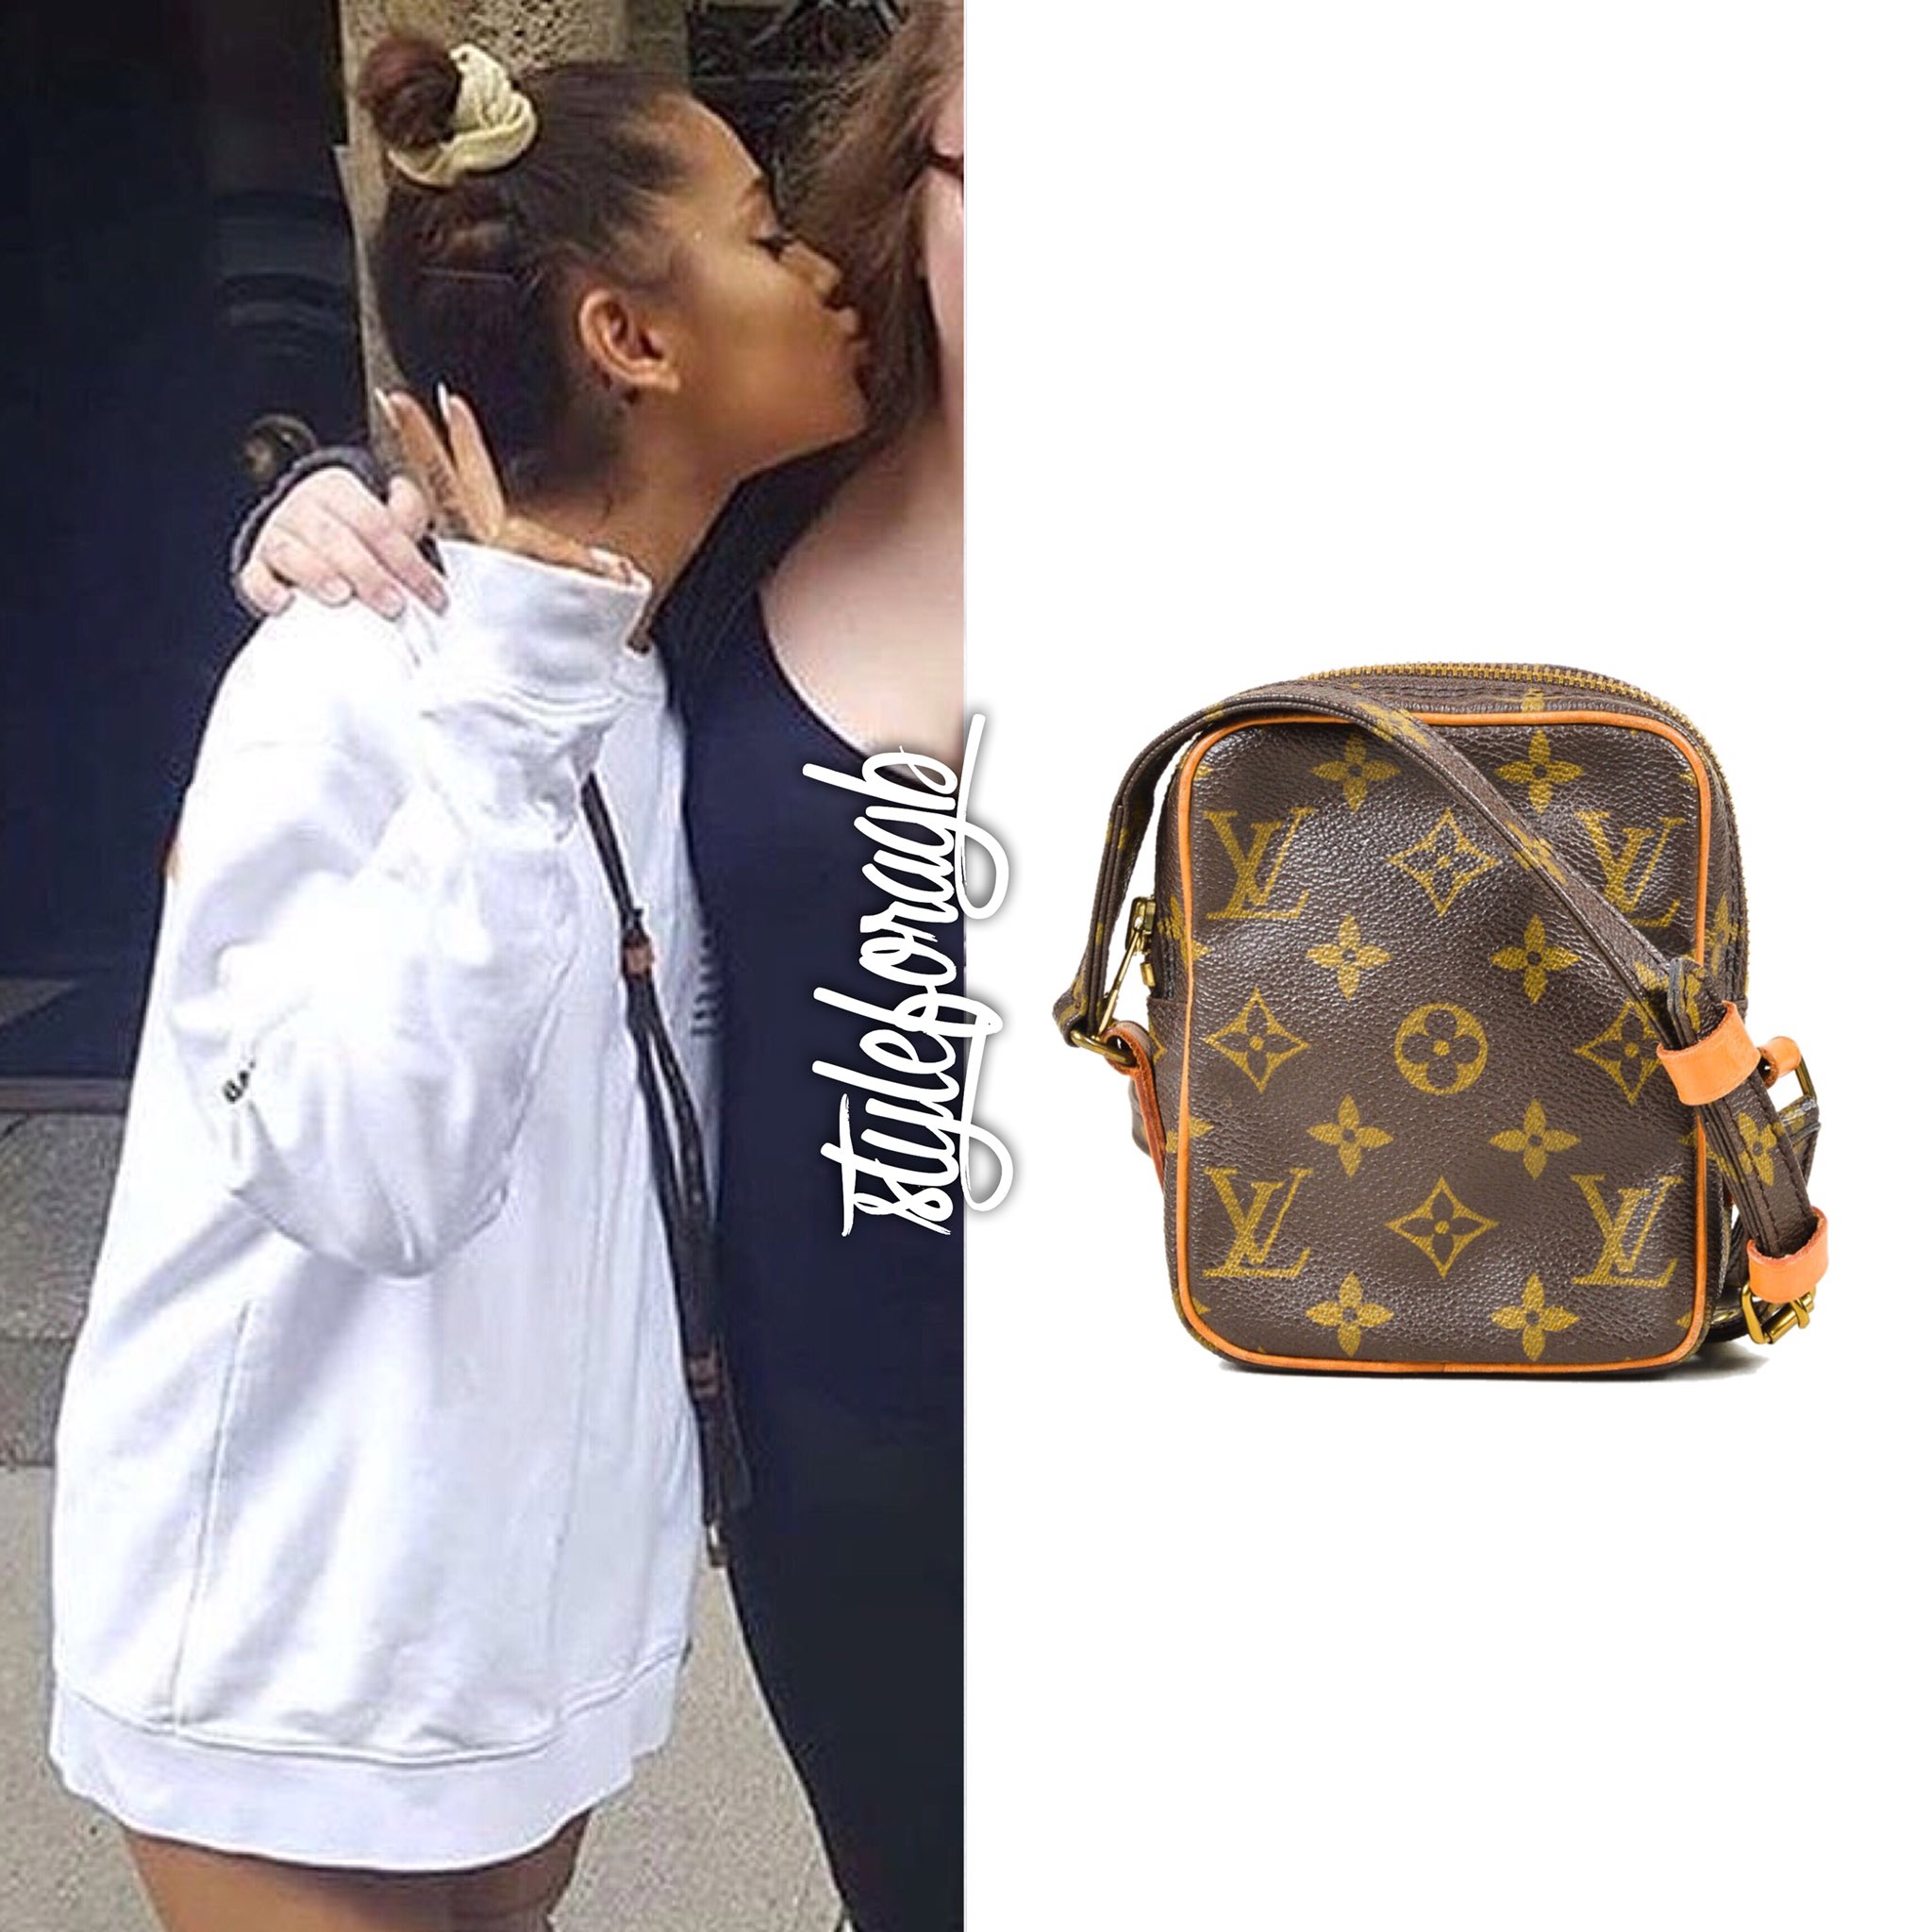 Let's Talk About Ariana Grande's Great Vintage Bags - PurseBlog